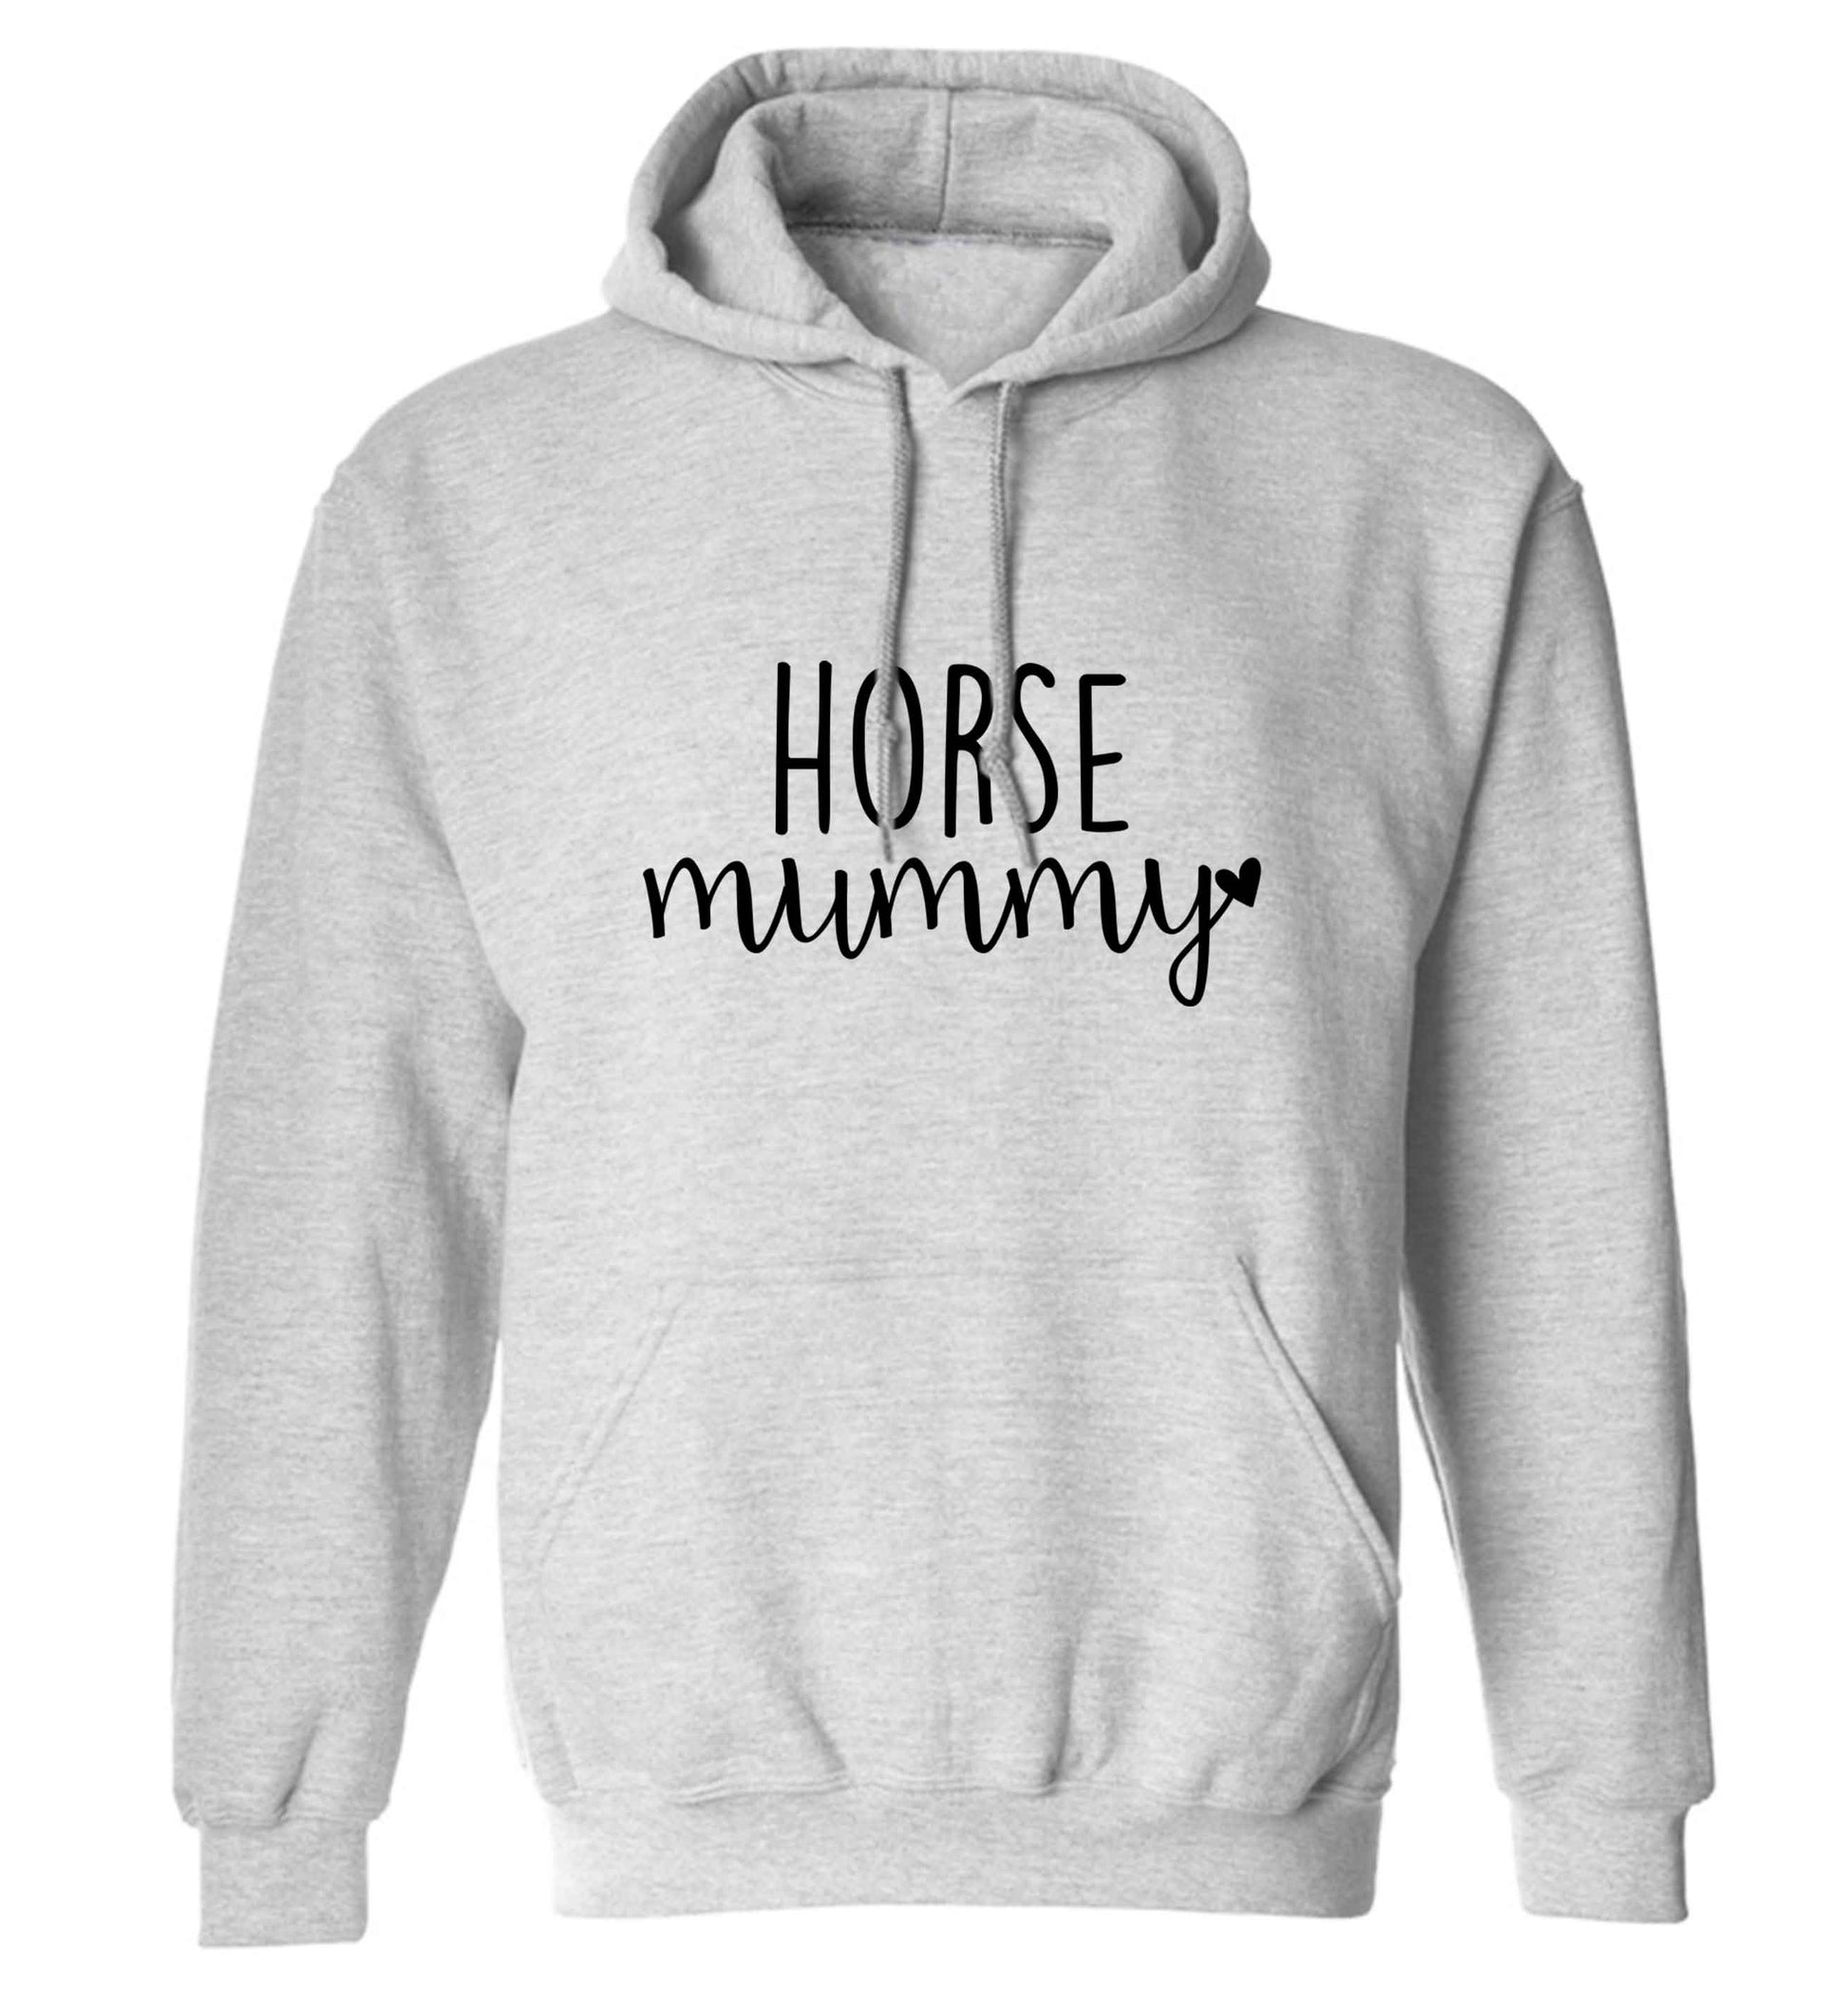 Horse mummy adults unisex grey hoodie 2XL